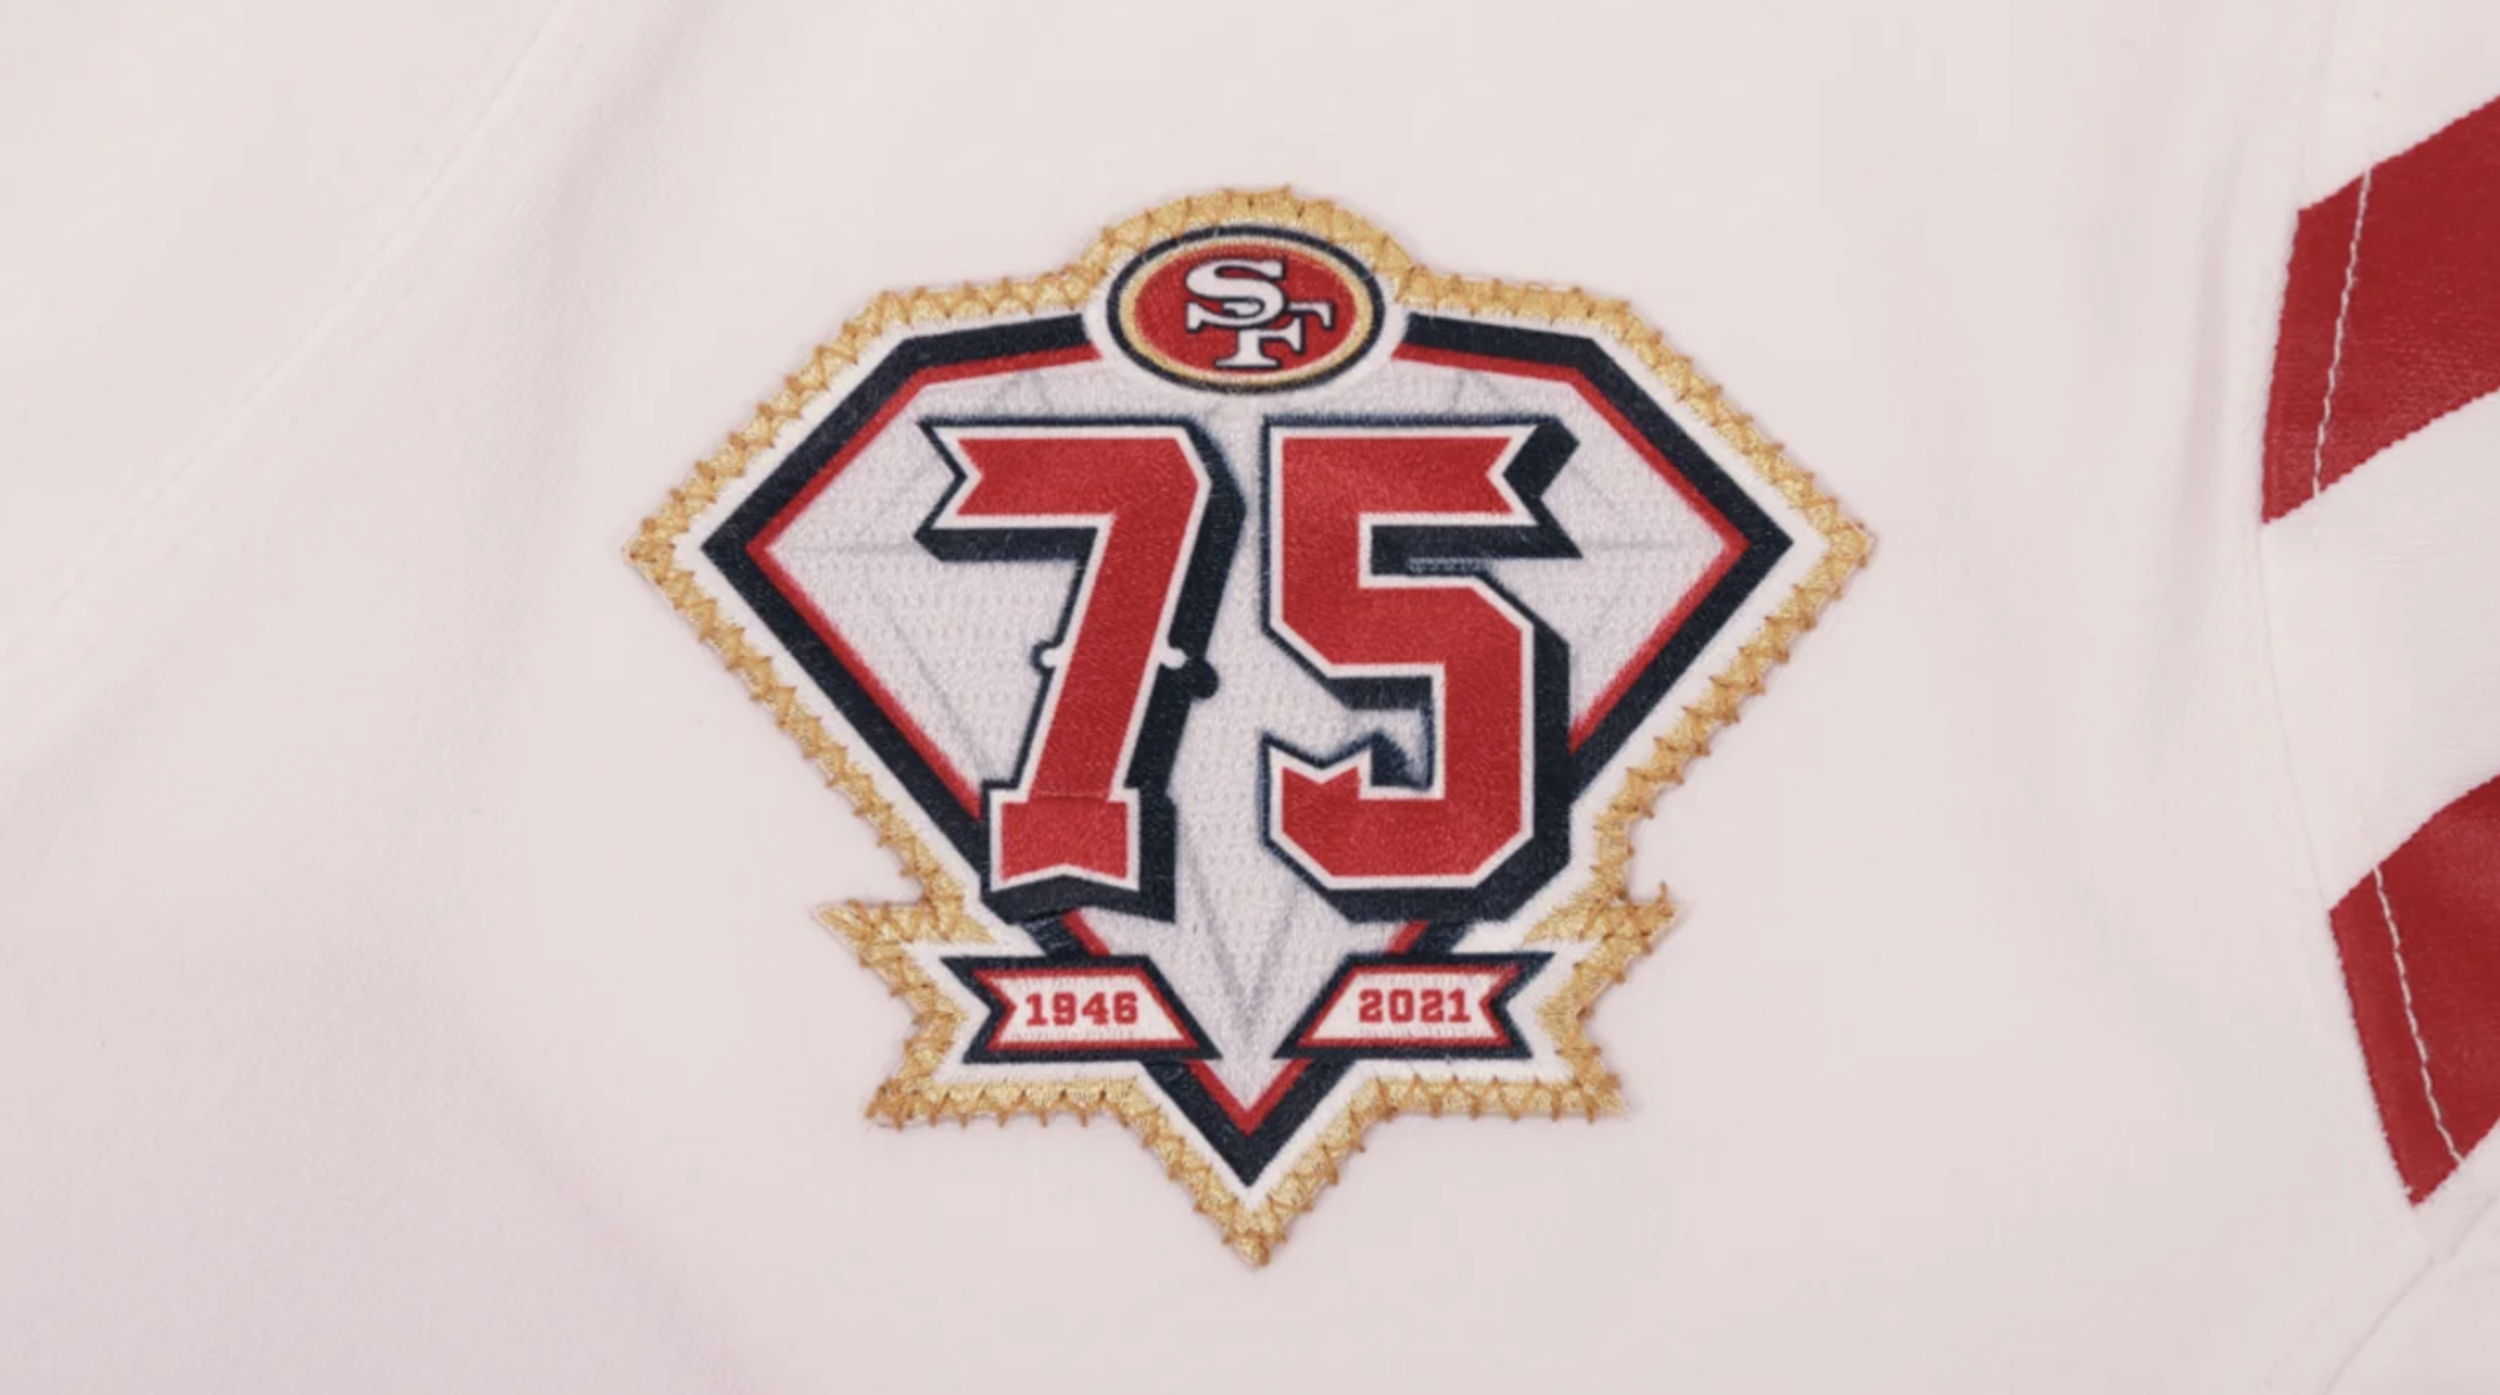 sf 49ers 75th anniversary